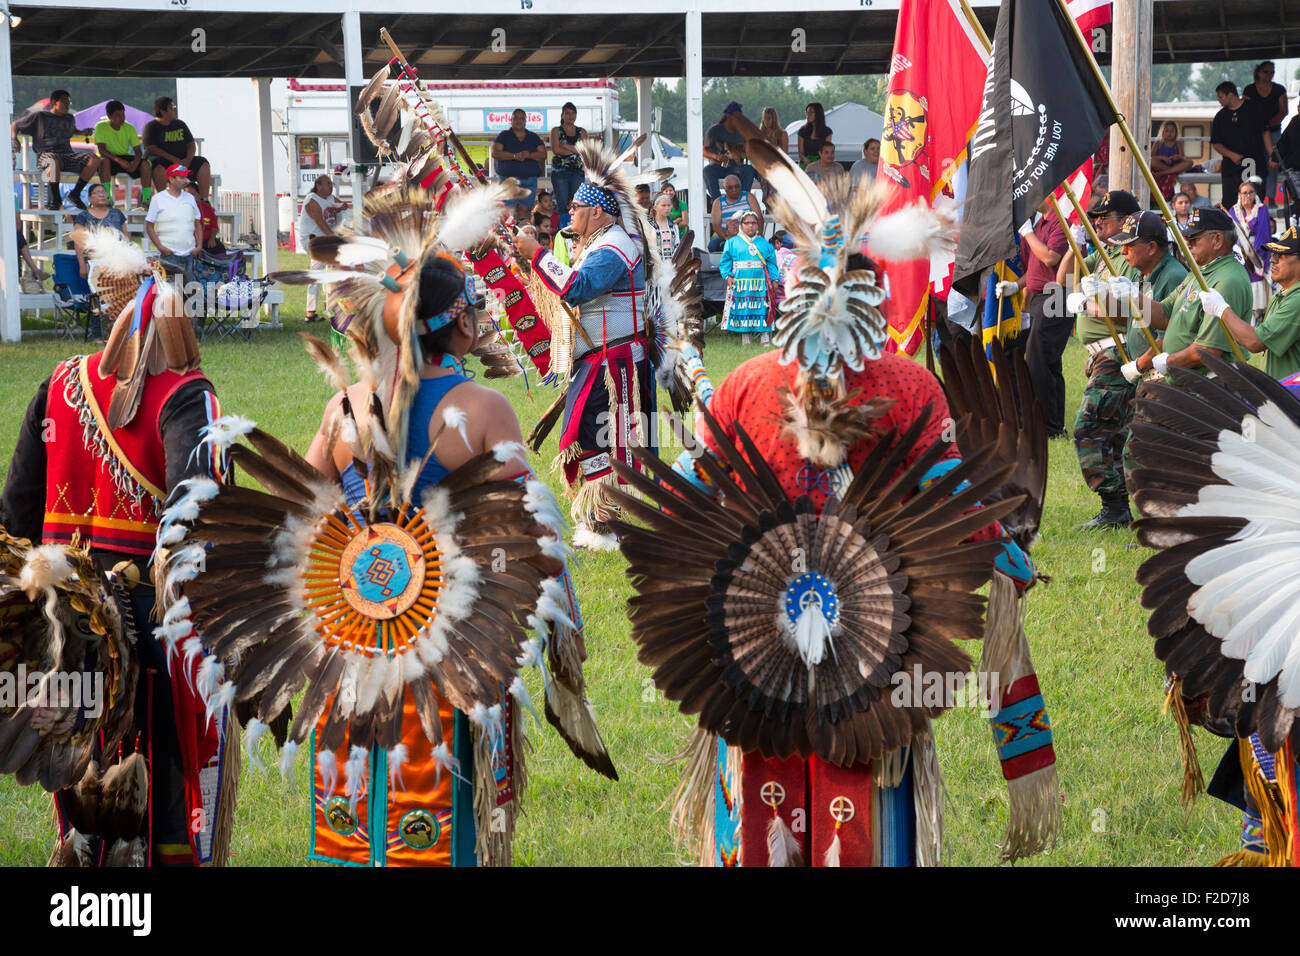 Rosebud Indian Reservation, South Dakota - The Rosebud Sioux Tribe's annual wacipi (powwow). Stock Photo